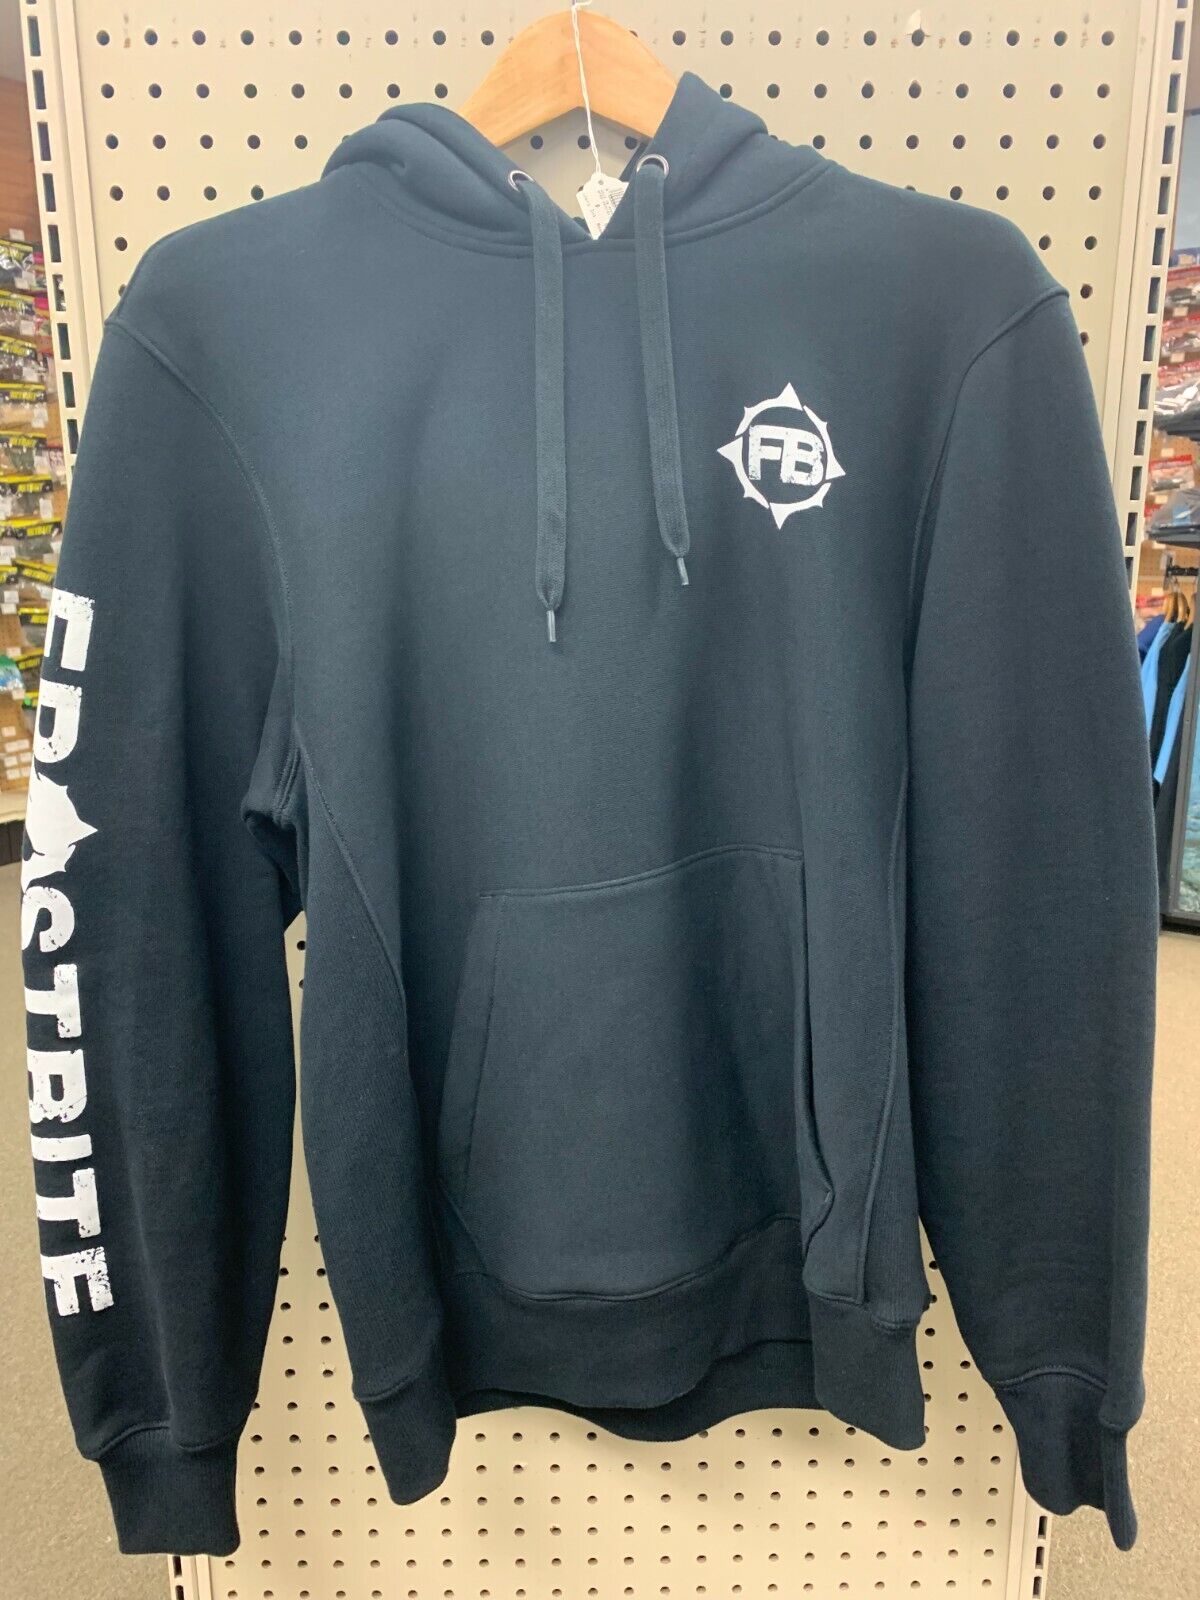 Frostbite Co. Black FB Hooded Sweatshirt (Select Size) | eBay